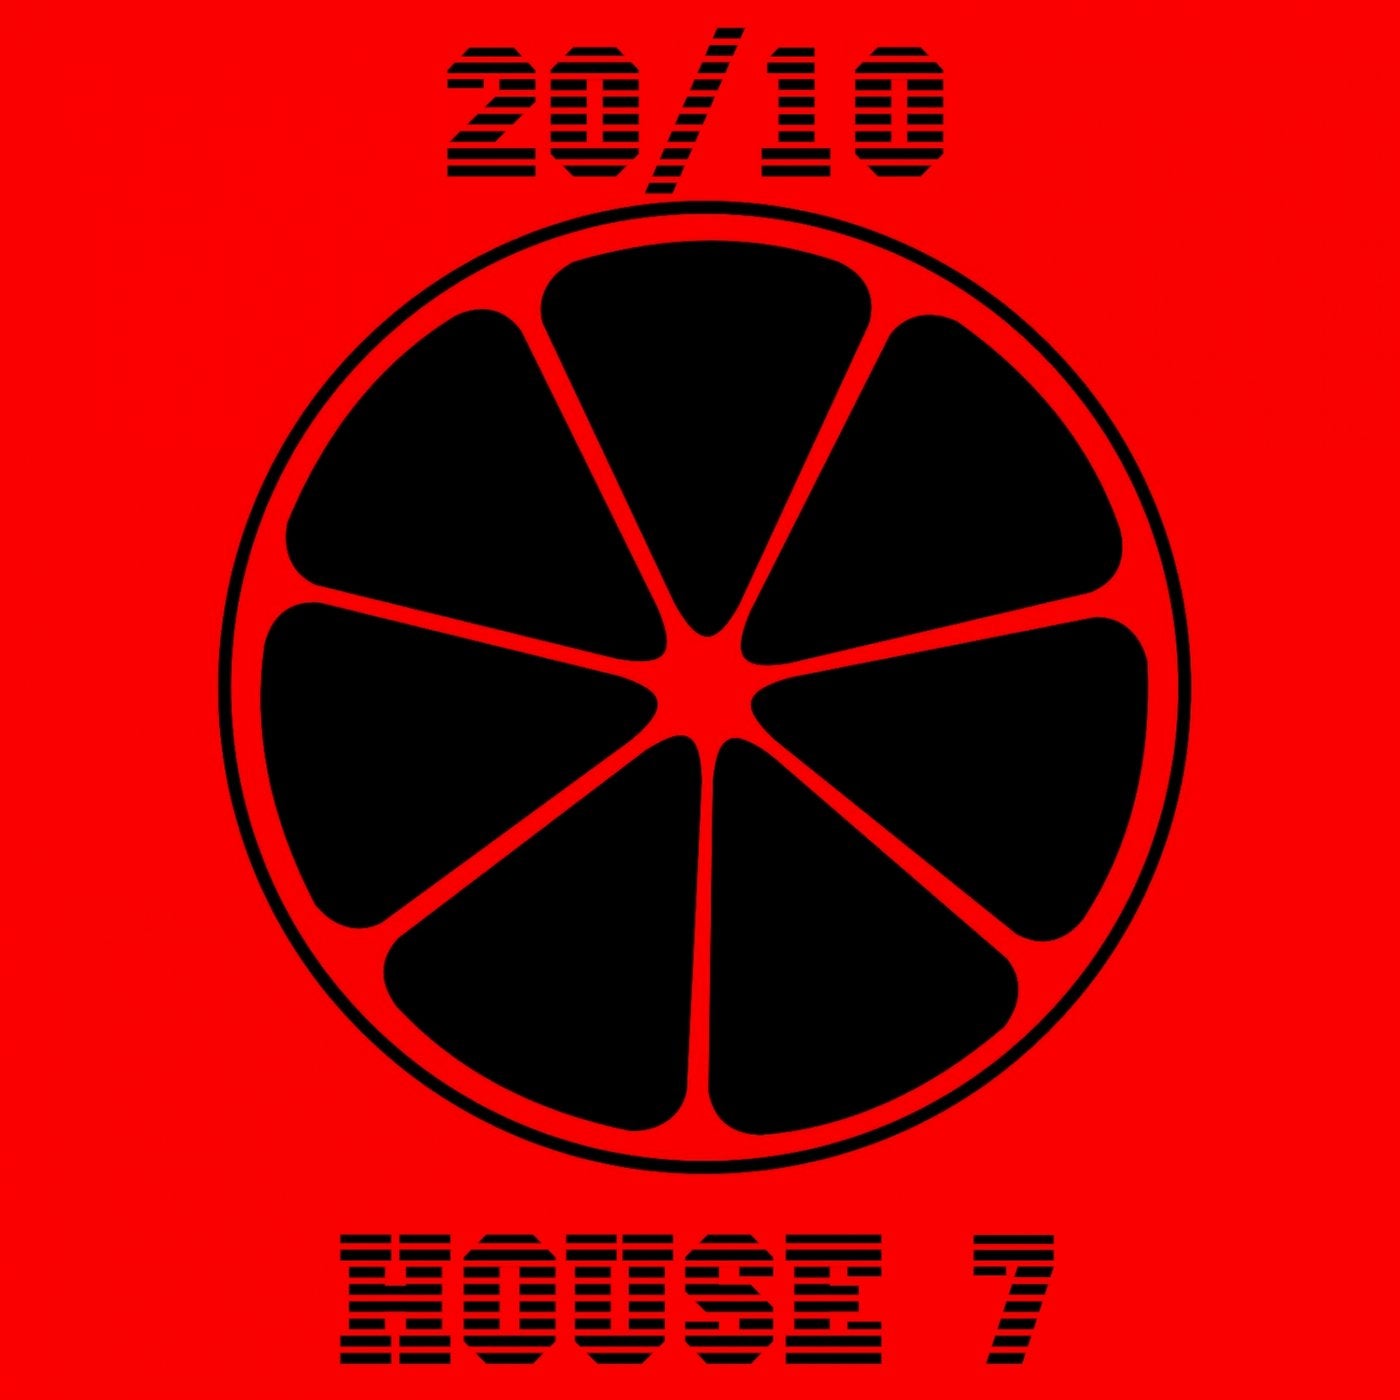 20/10 House, Vol. 7